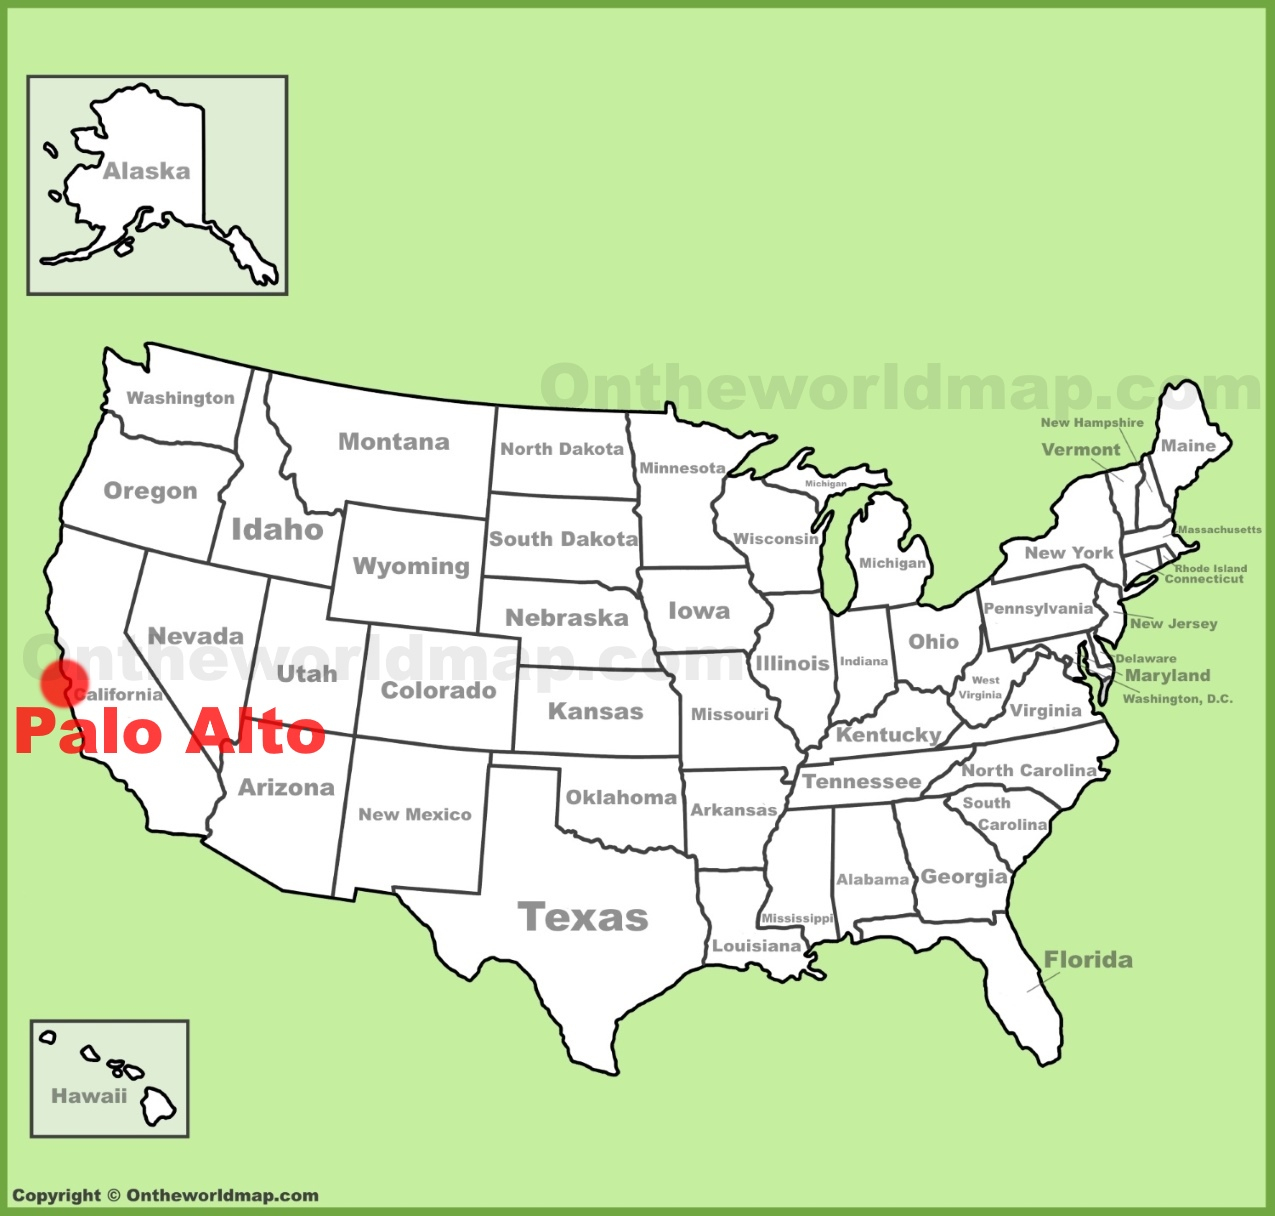 Palo Alto Location On The U.s. Map - Palo Alto California Map